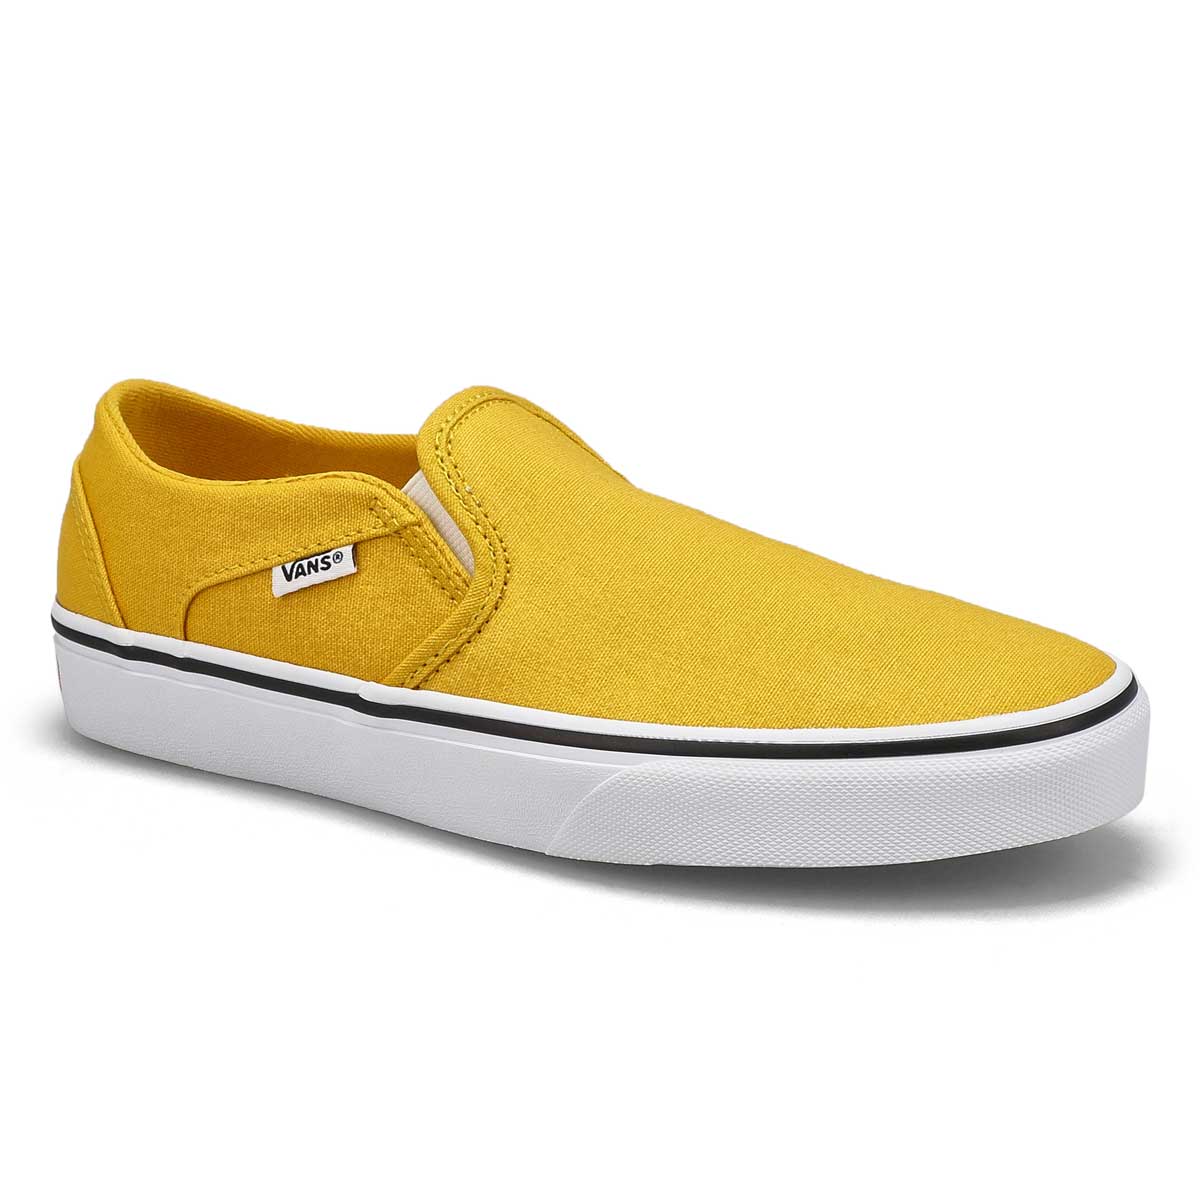 yellow van slides